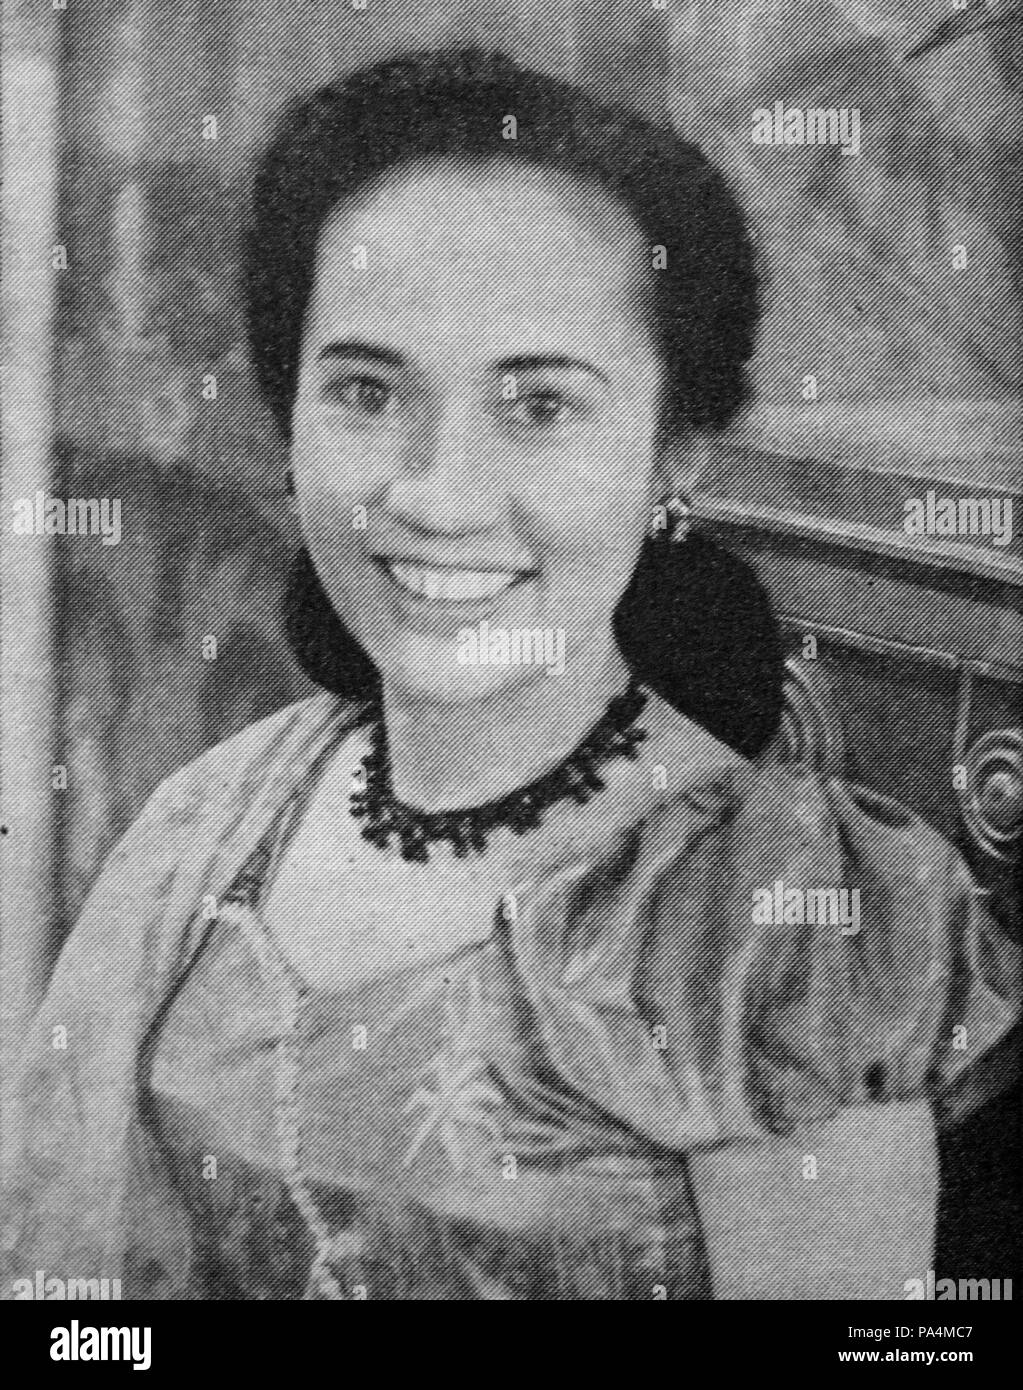 210 R Umami, Film Varia 1.8 (July 1954), p30 Stock Photo